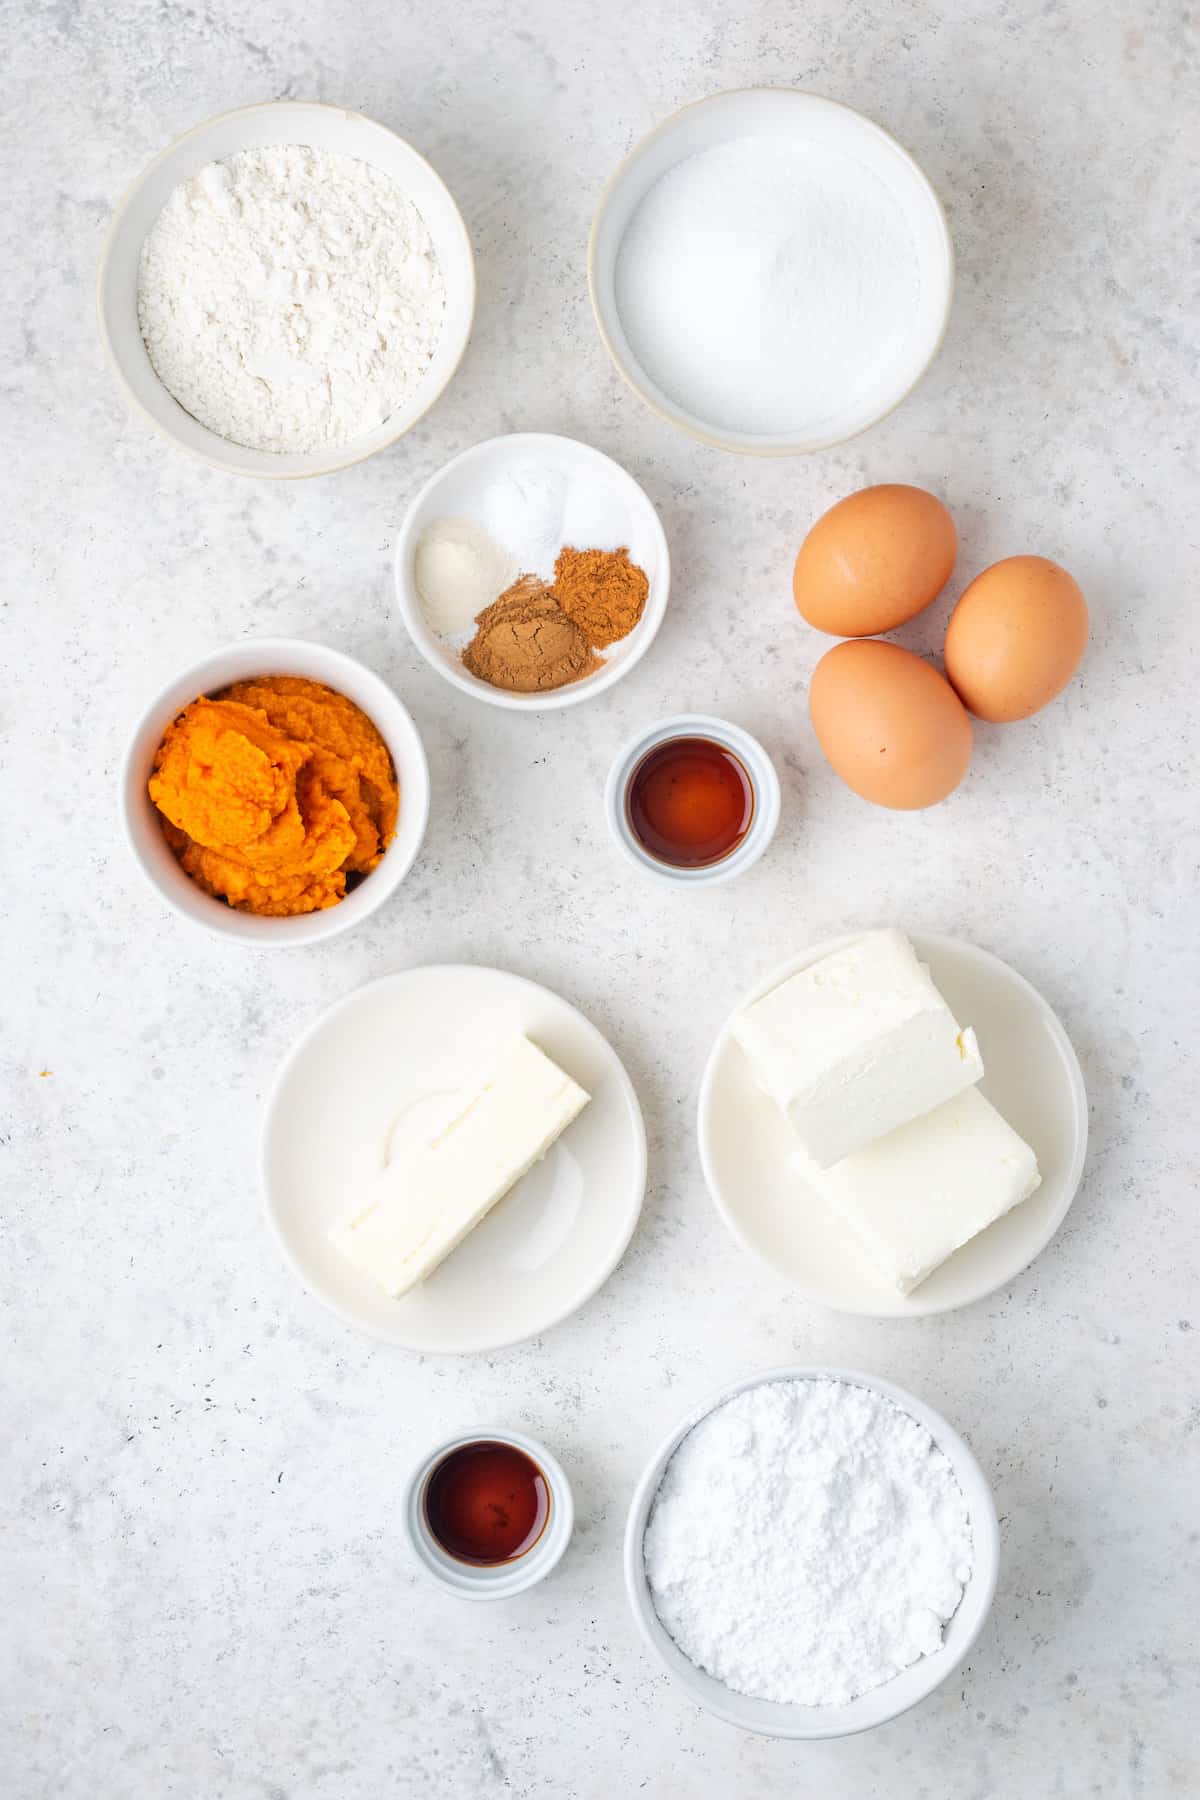 Ingredients for pumpkin roll are shown: eggs, pumpkin puree, cream cheese, butter, sugar, powdered sugar, spices.